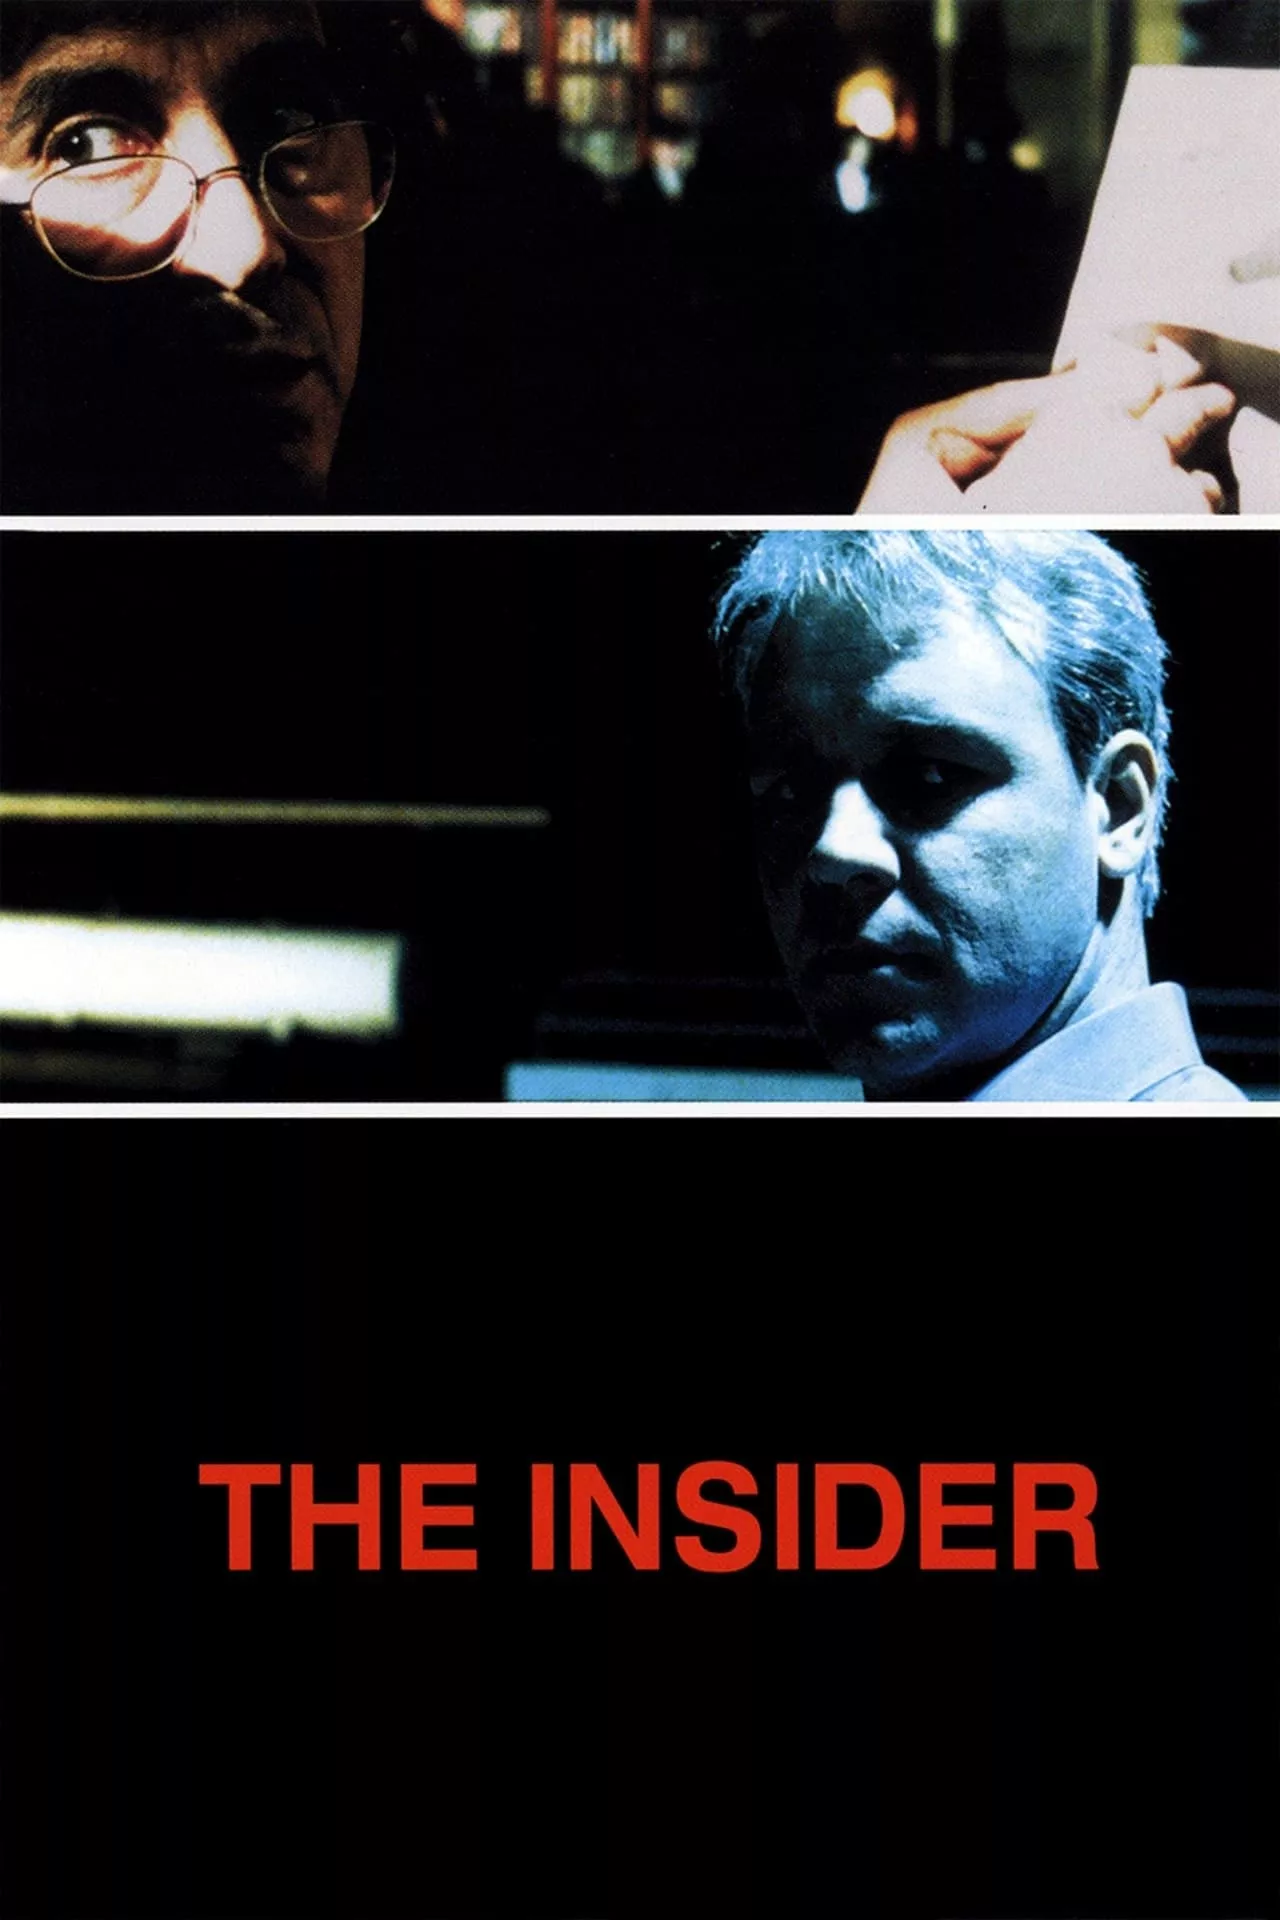 The Insider (1999) คดีโลกตะลึง